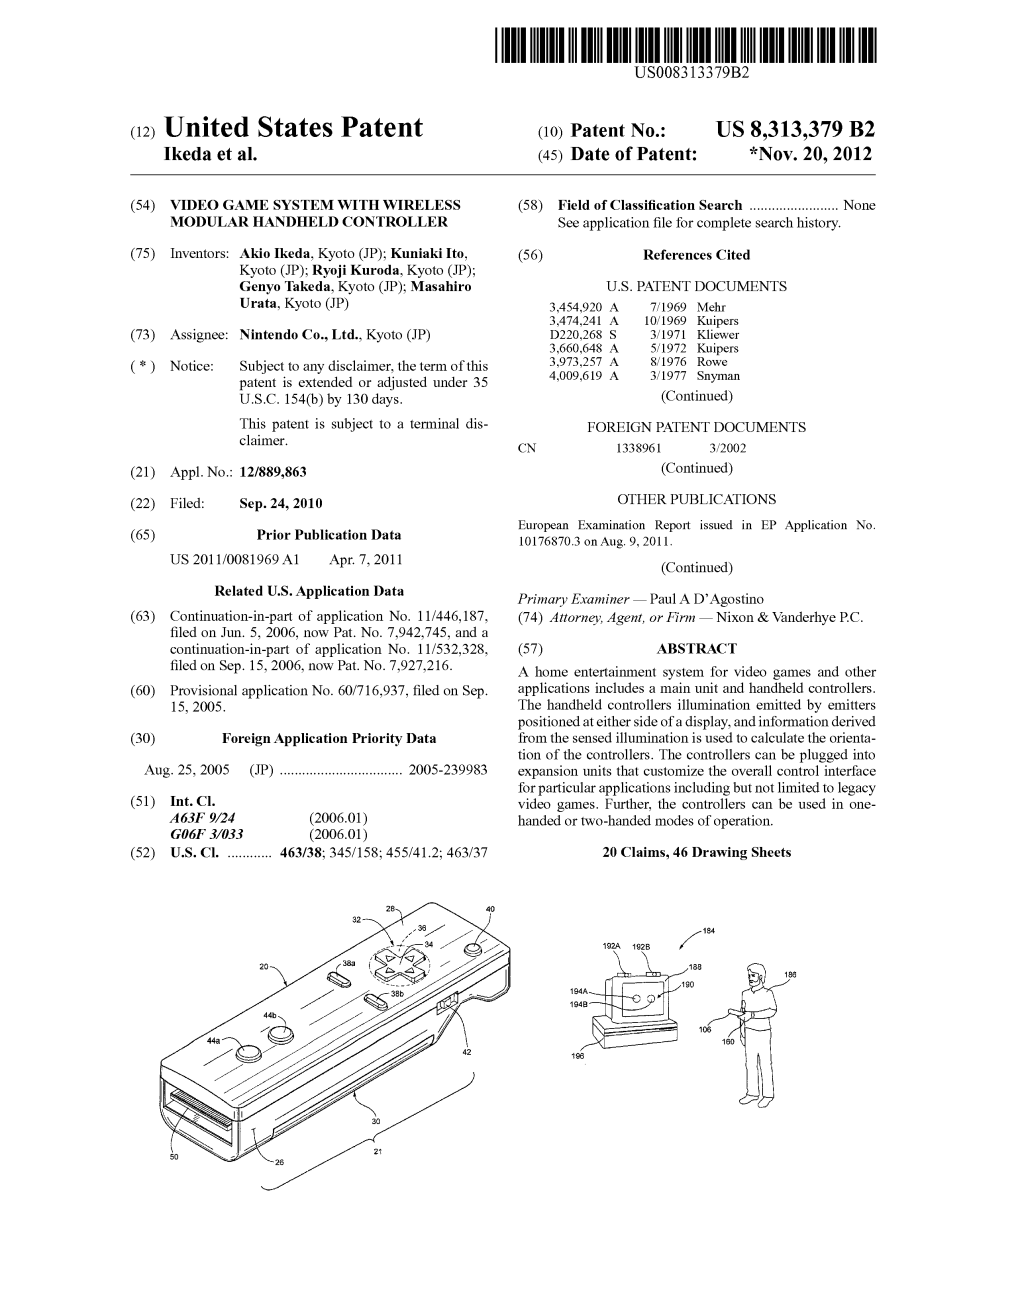 Ikeda Et Al. (45) Date of Patent: *Nov